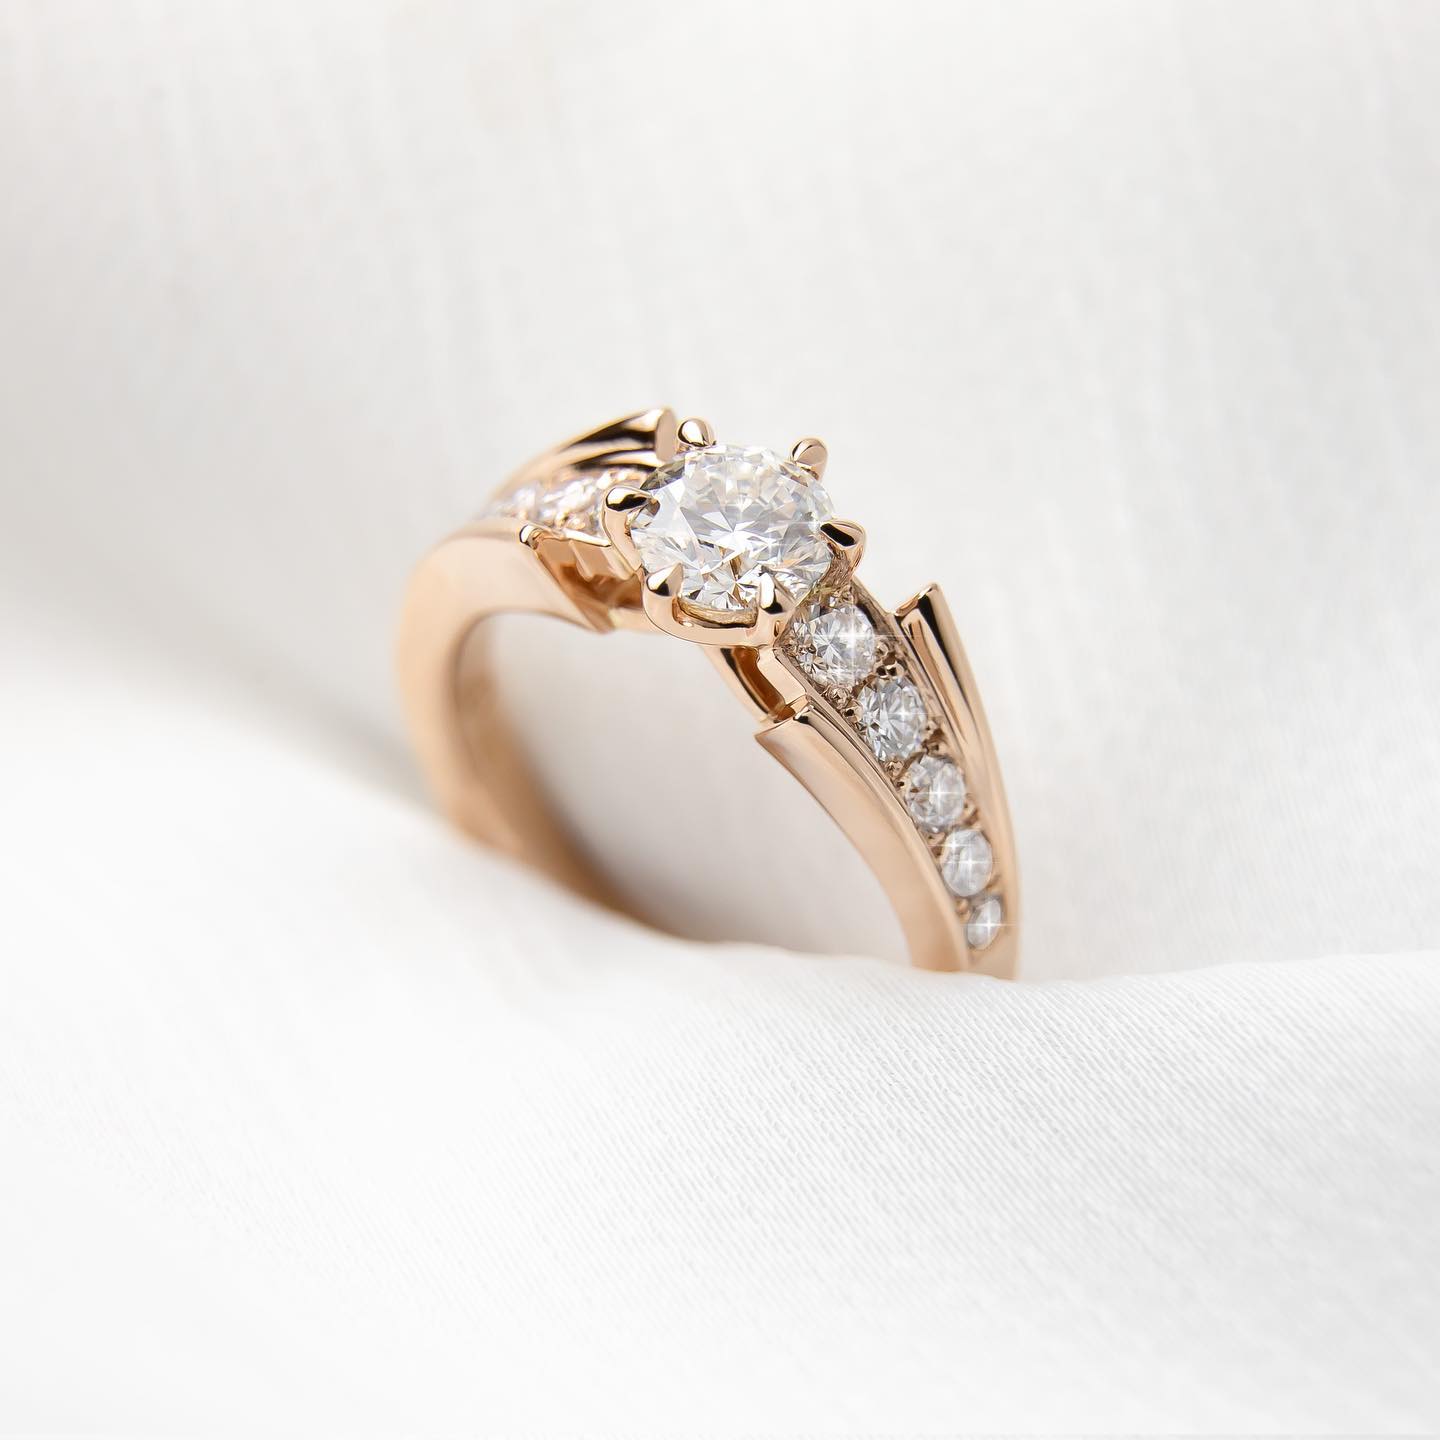 Best Collection Of Art Nouveau Engagement Rings